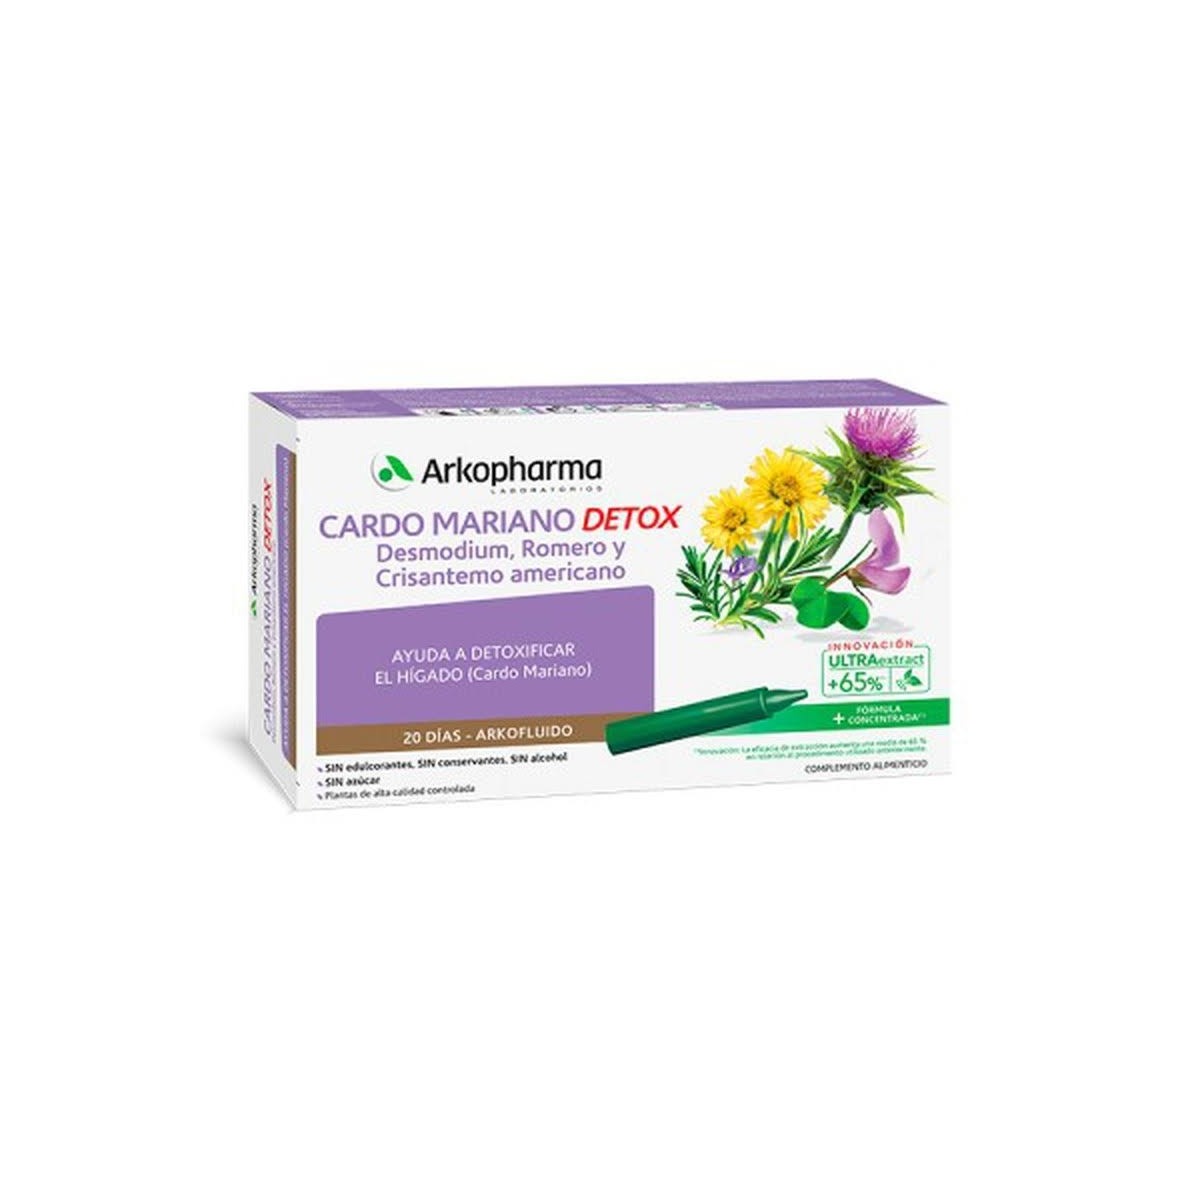 arkopharma-arkofluido-cardo-mariano-detox-20-ampollas